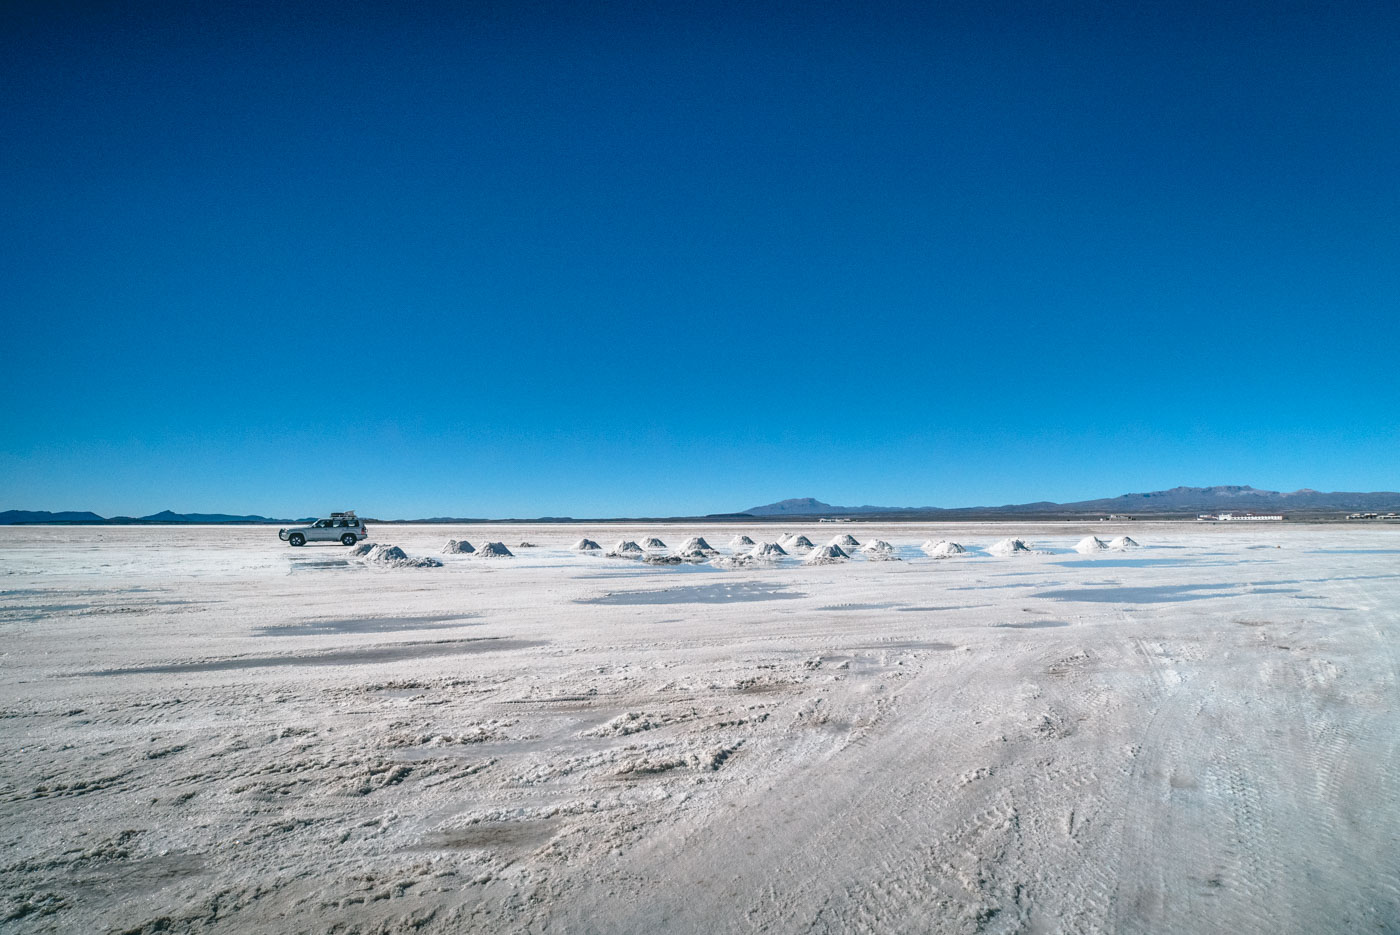 Salt flat, Volcanoes, Desert and more - Exploring Southern Bolivia on a Salar de Uyuni Tour